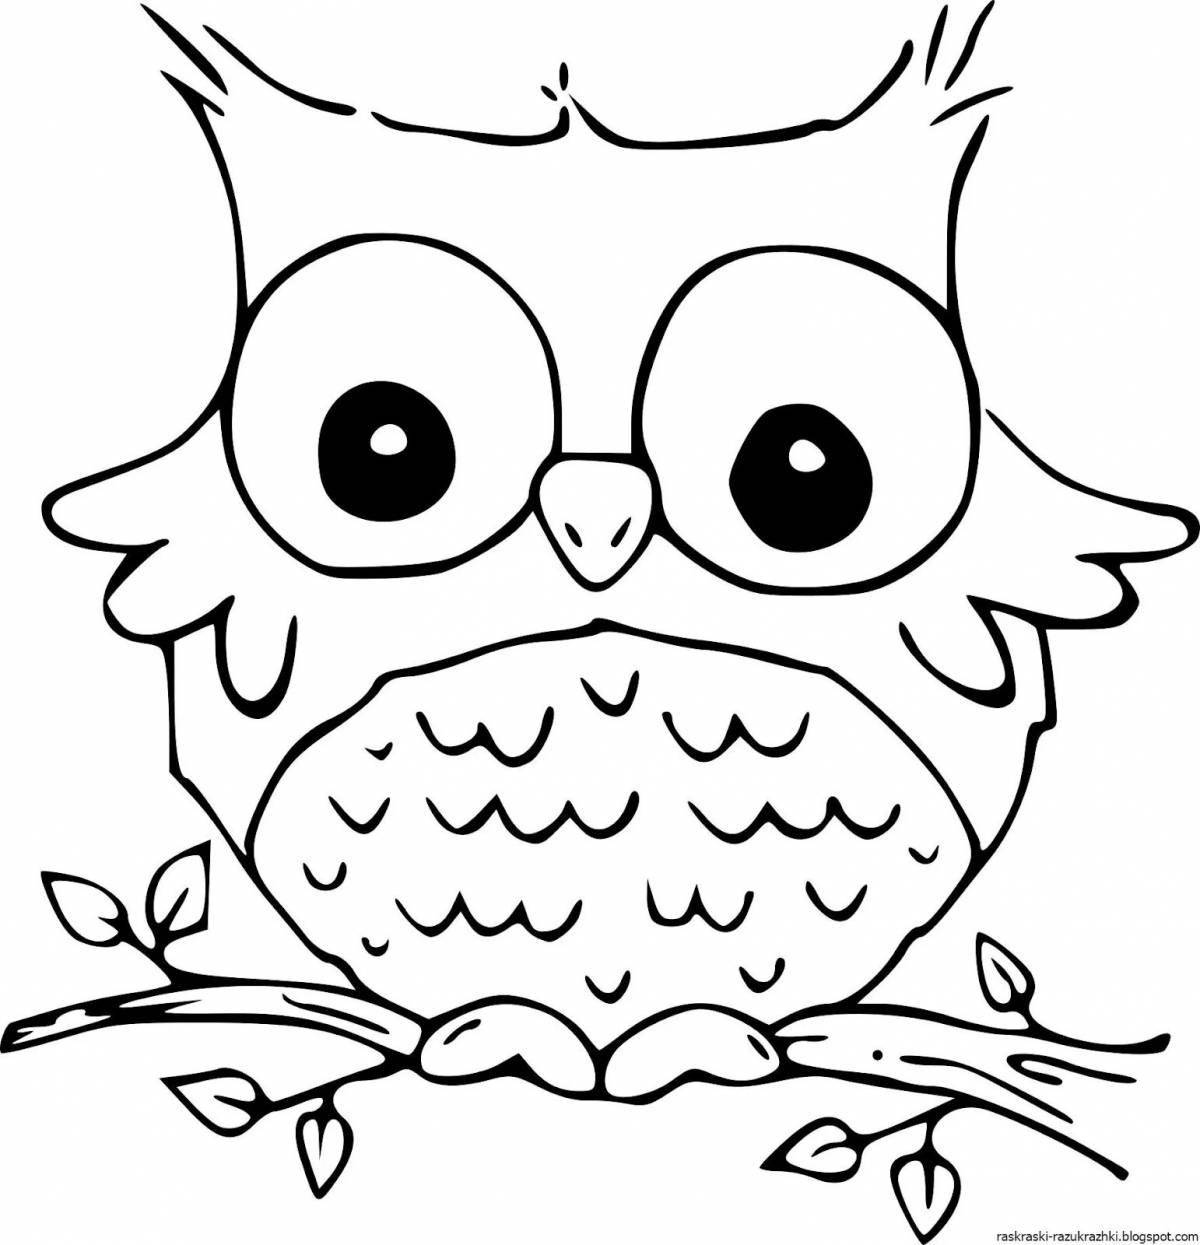 Coloring page cute hip hop owlet